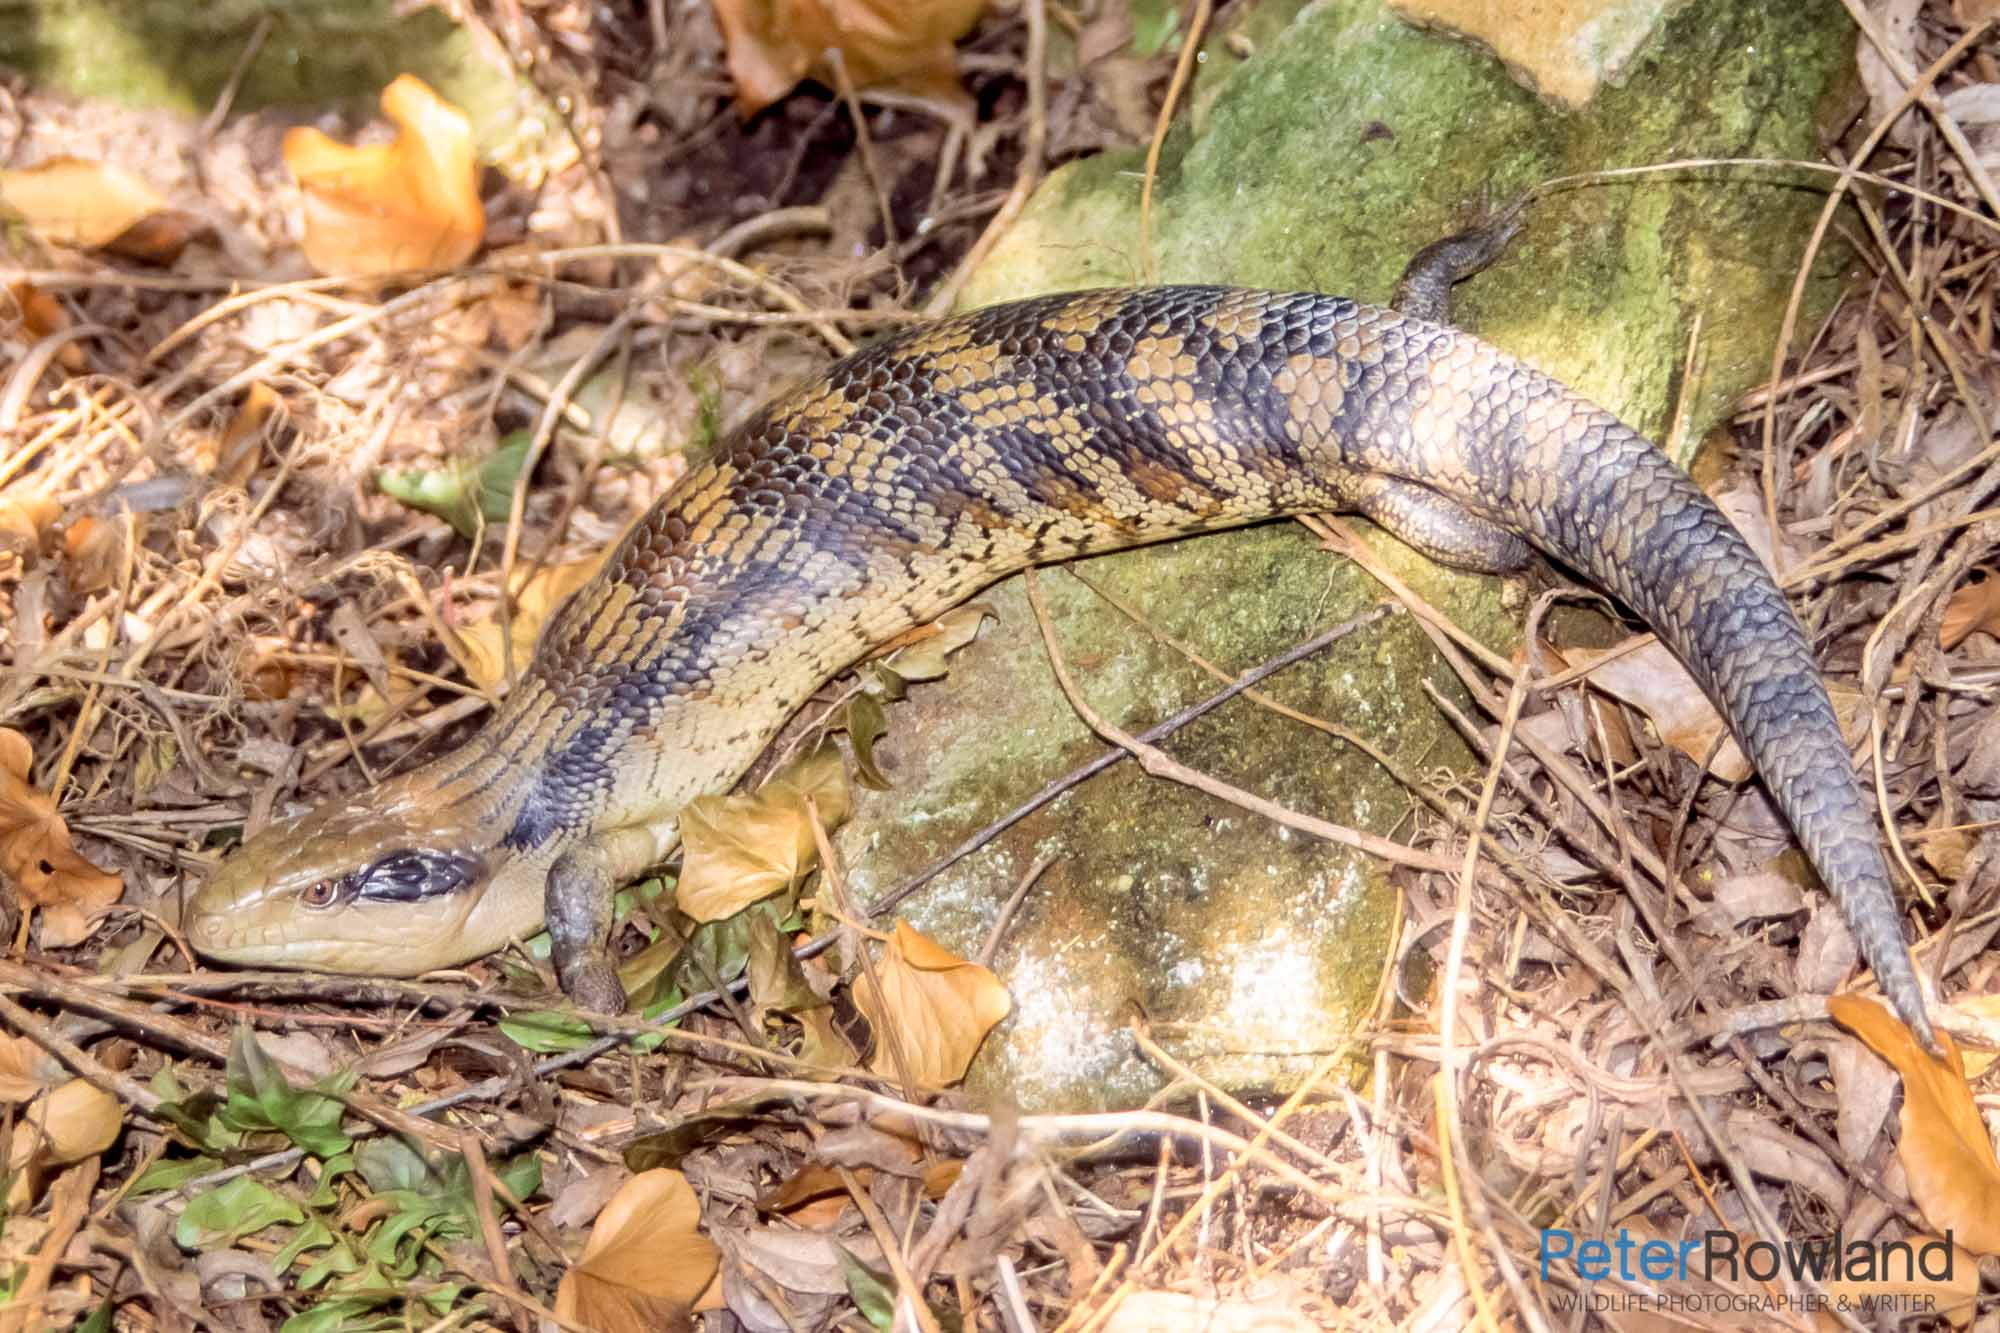 An Eastern Blue Tongue lizard crawling over a rock in the garden